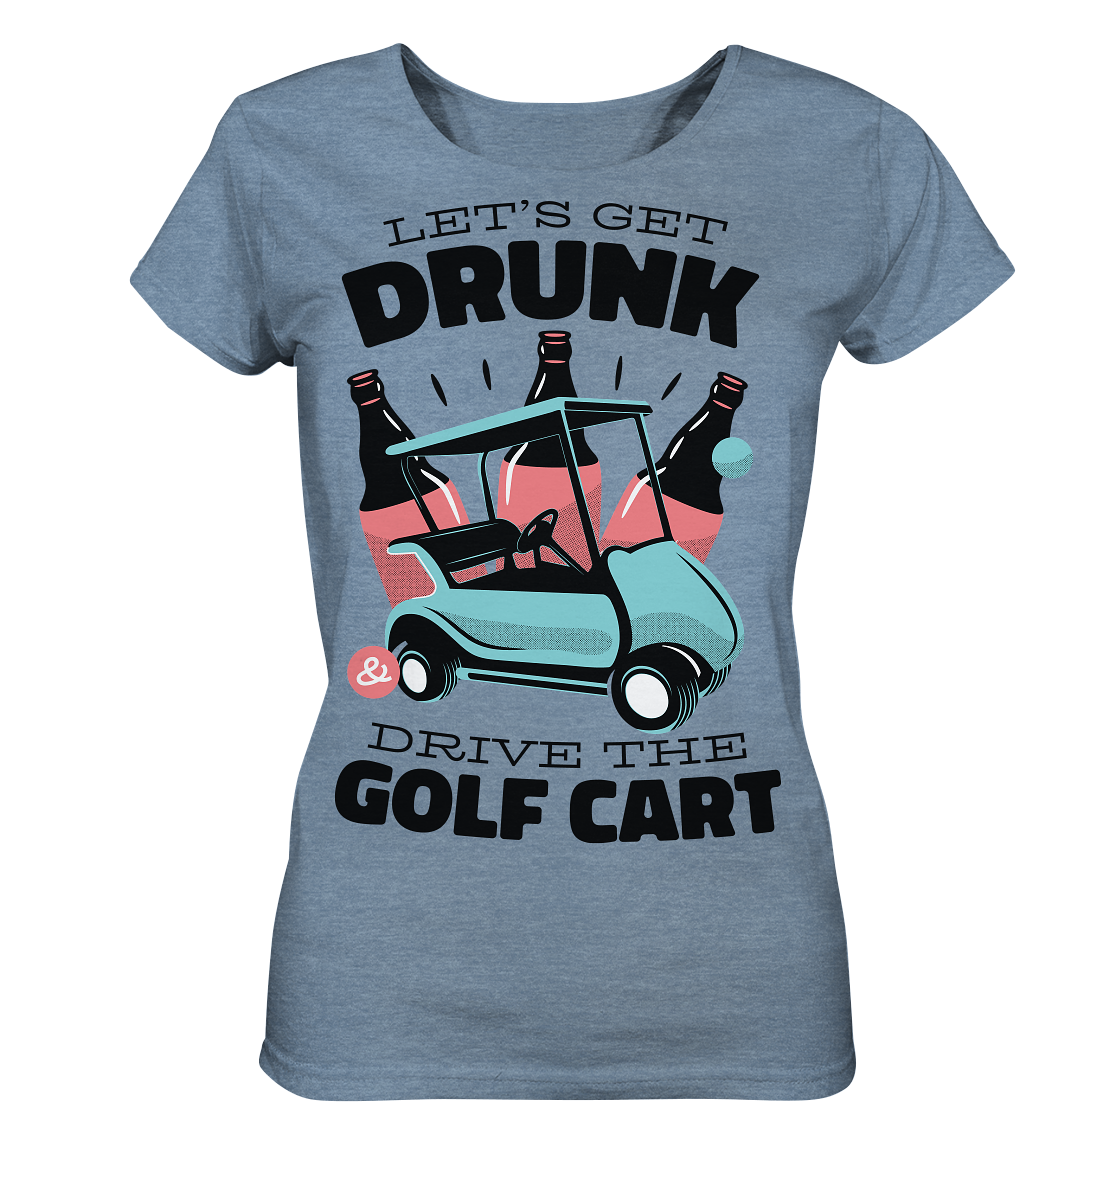 Let's get drunk drive the golf cart - Ladies Organic Shirt (mottled)